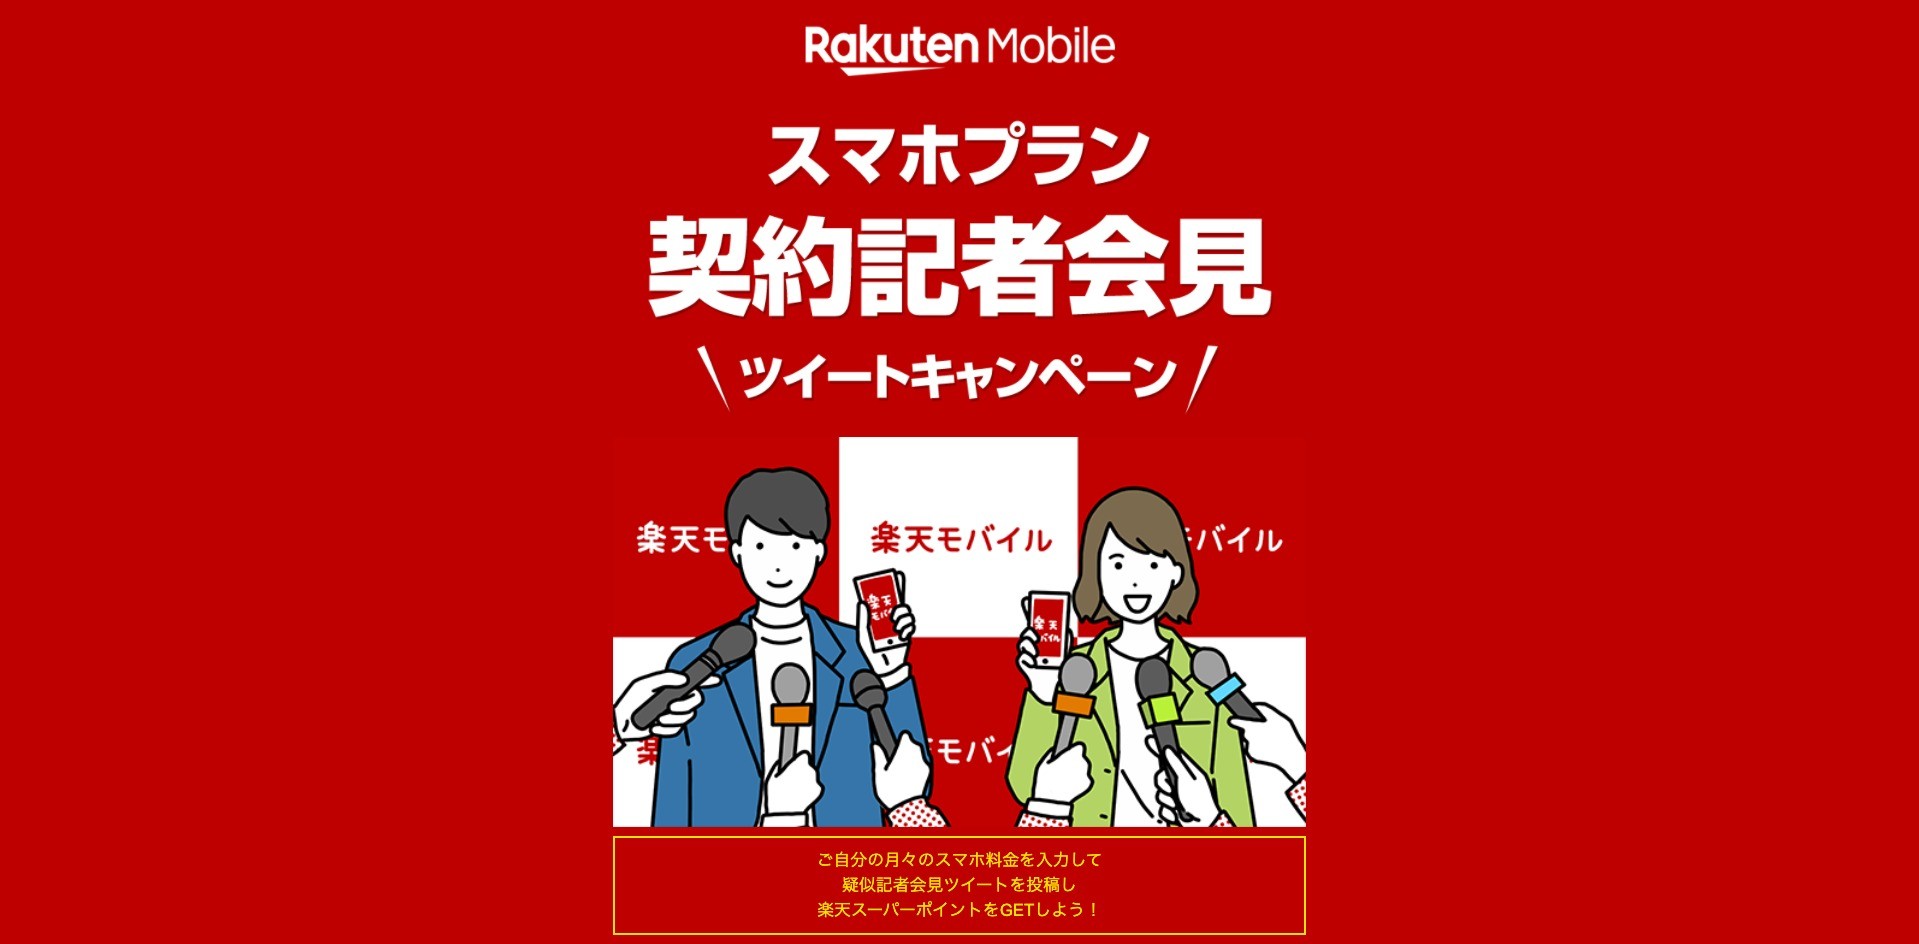 Rakuten Mobile スマホプラン 契約記者会見ツイートキャンペーン